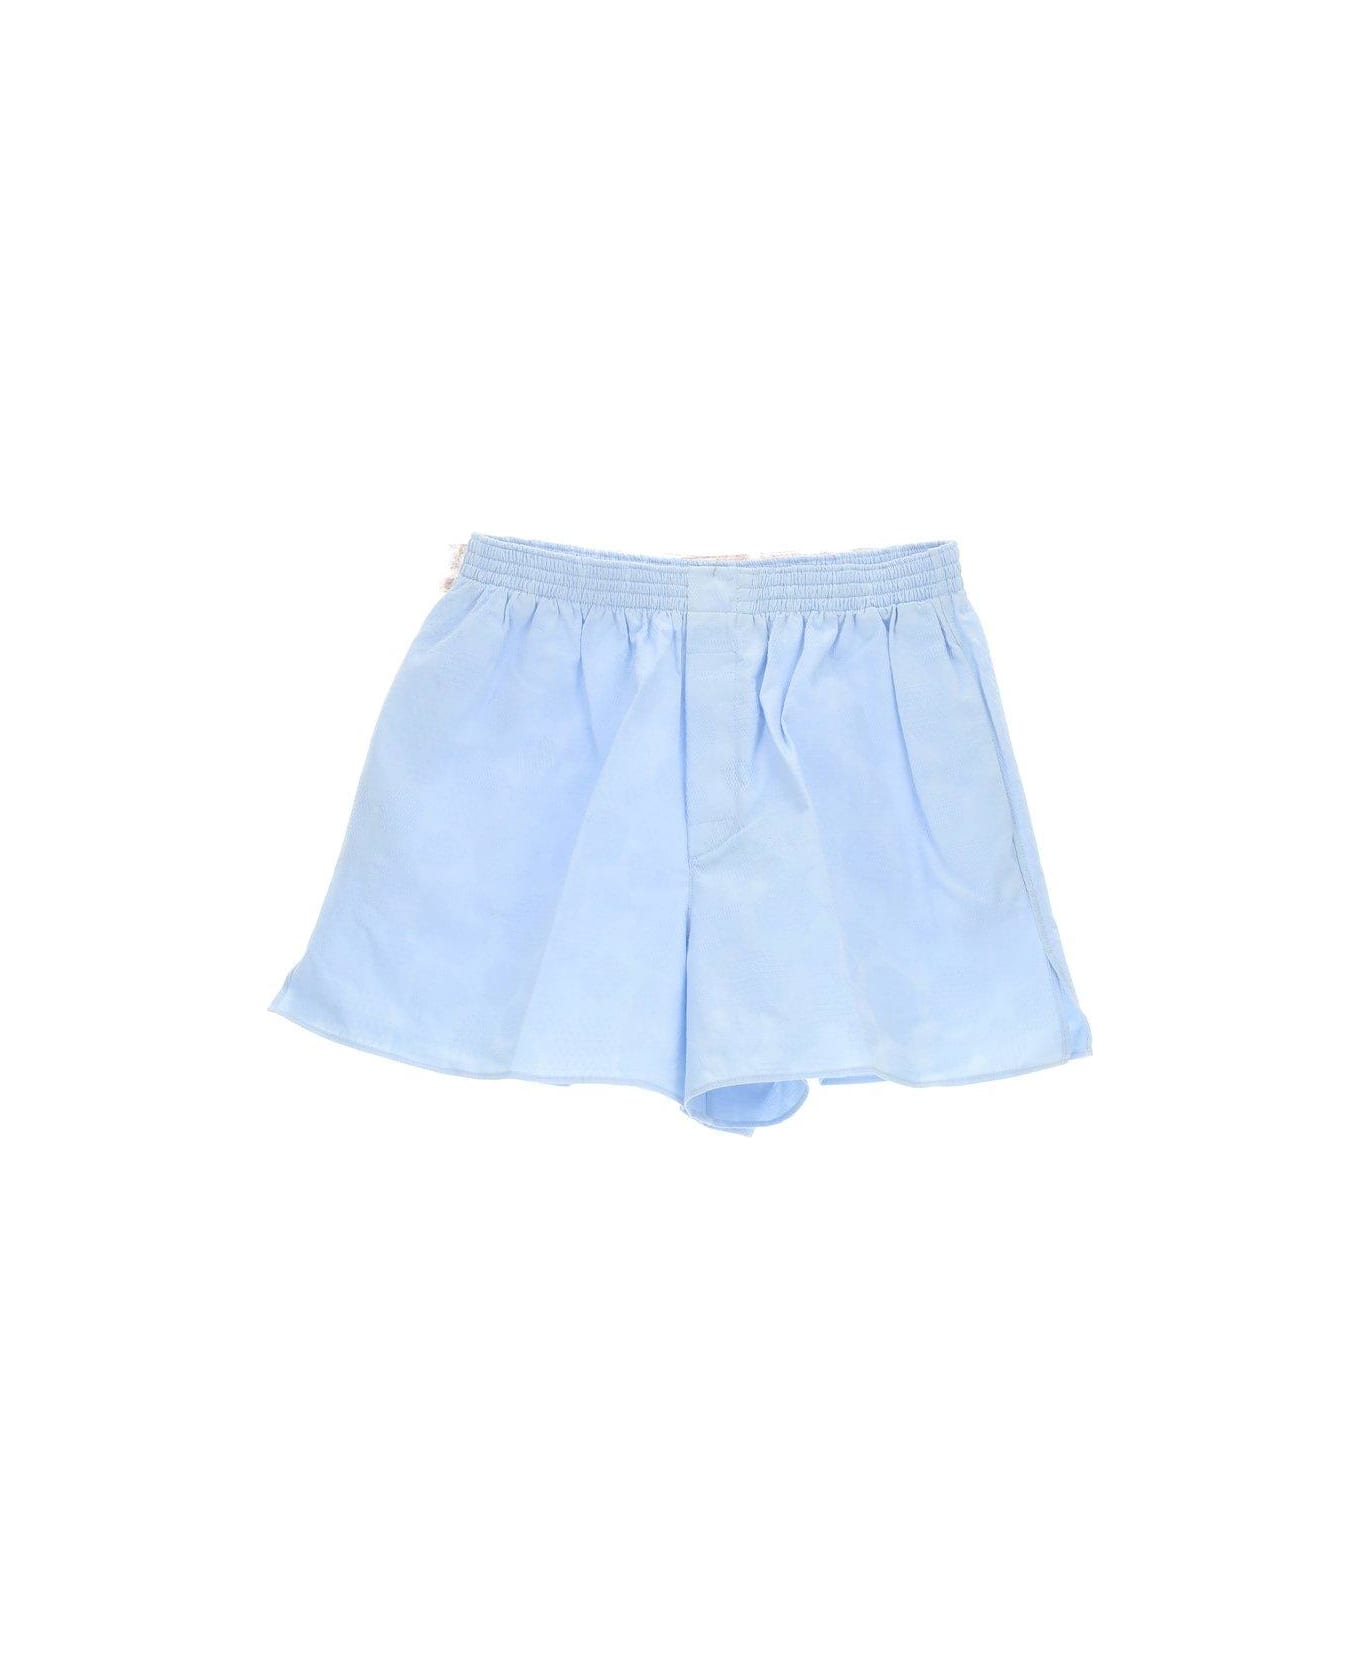 Chloé Boxer Shorts - PURE BLU